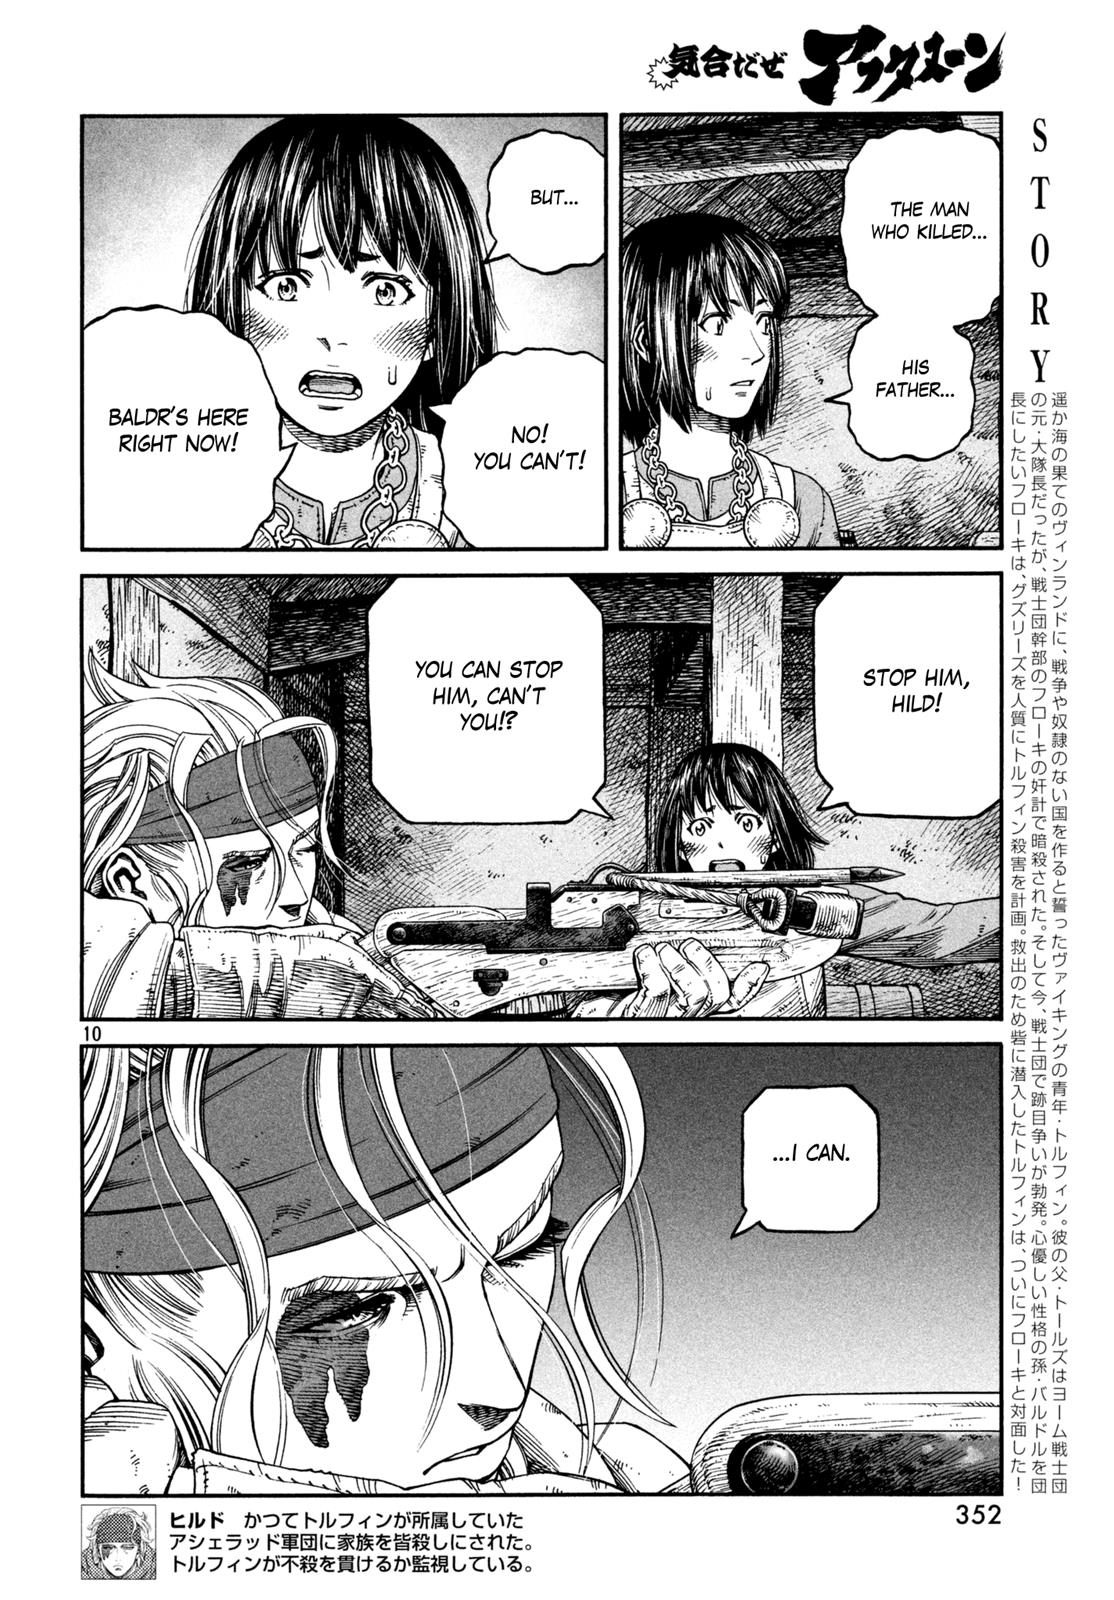 Vinland Saga Manga Manga Chapter - 149 - image 10